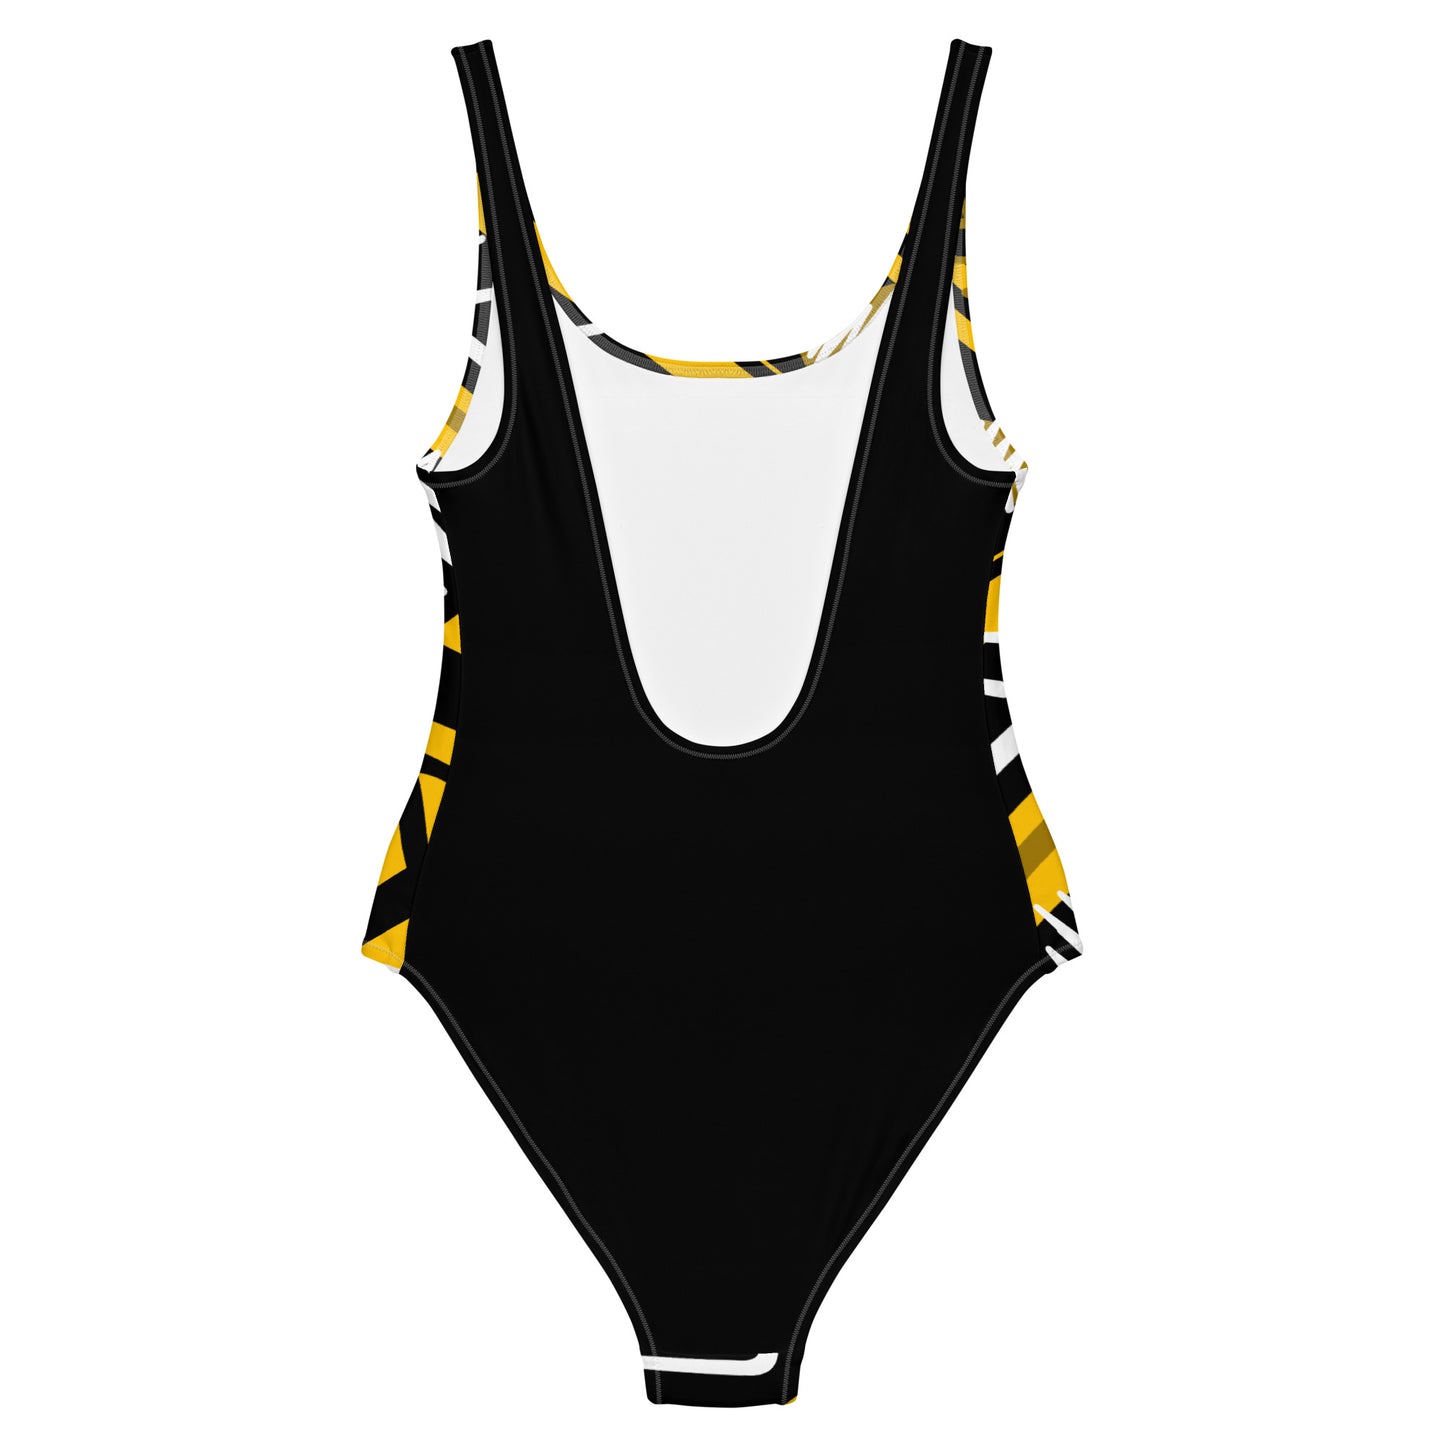 King College Prep Swimsuit | Bodysuit | King Jaguars